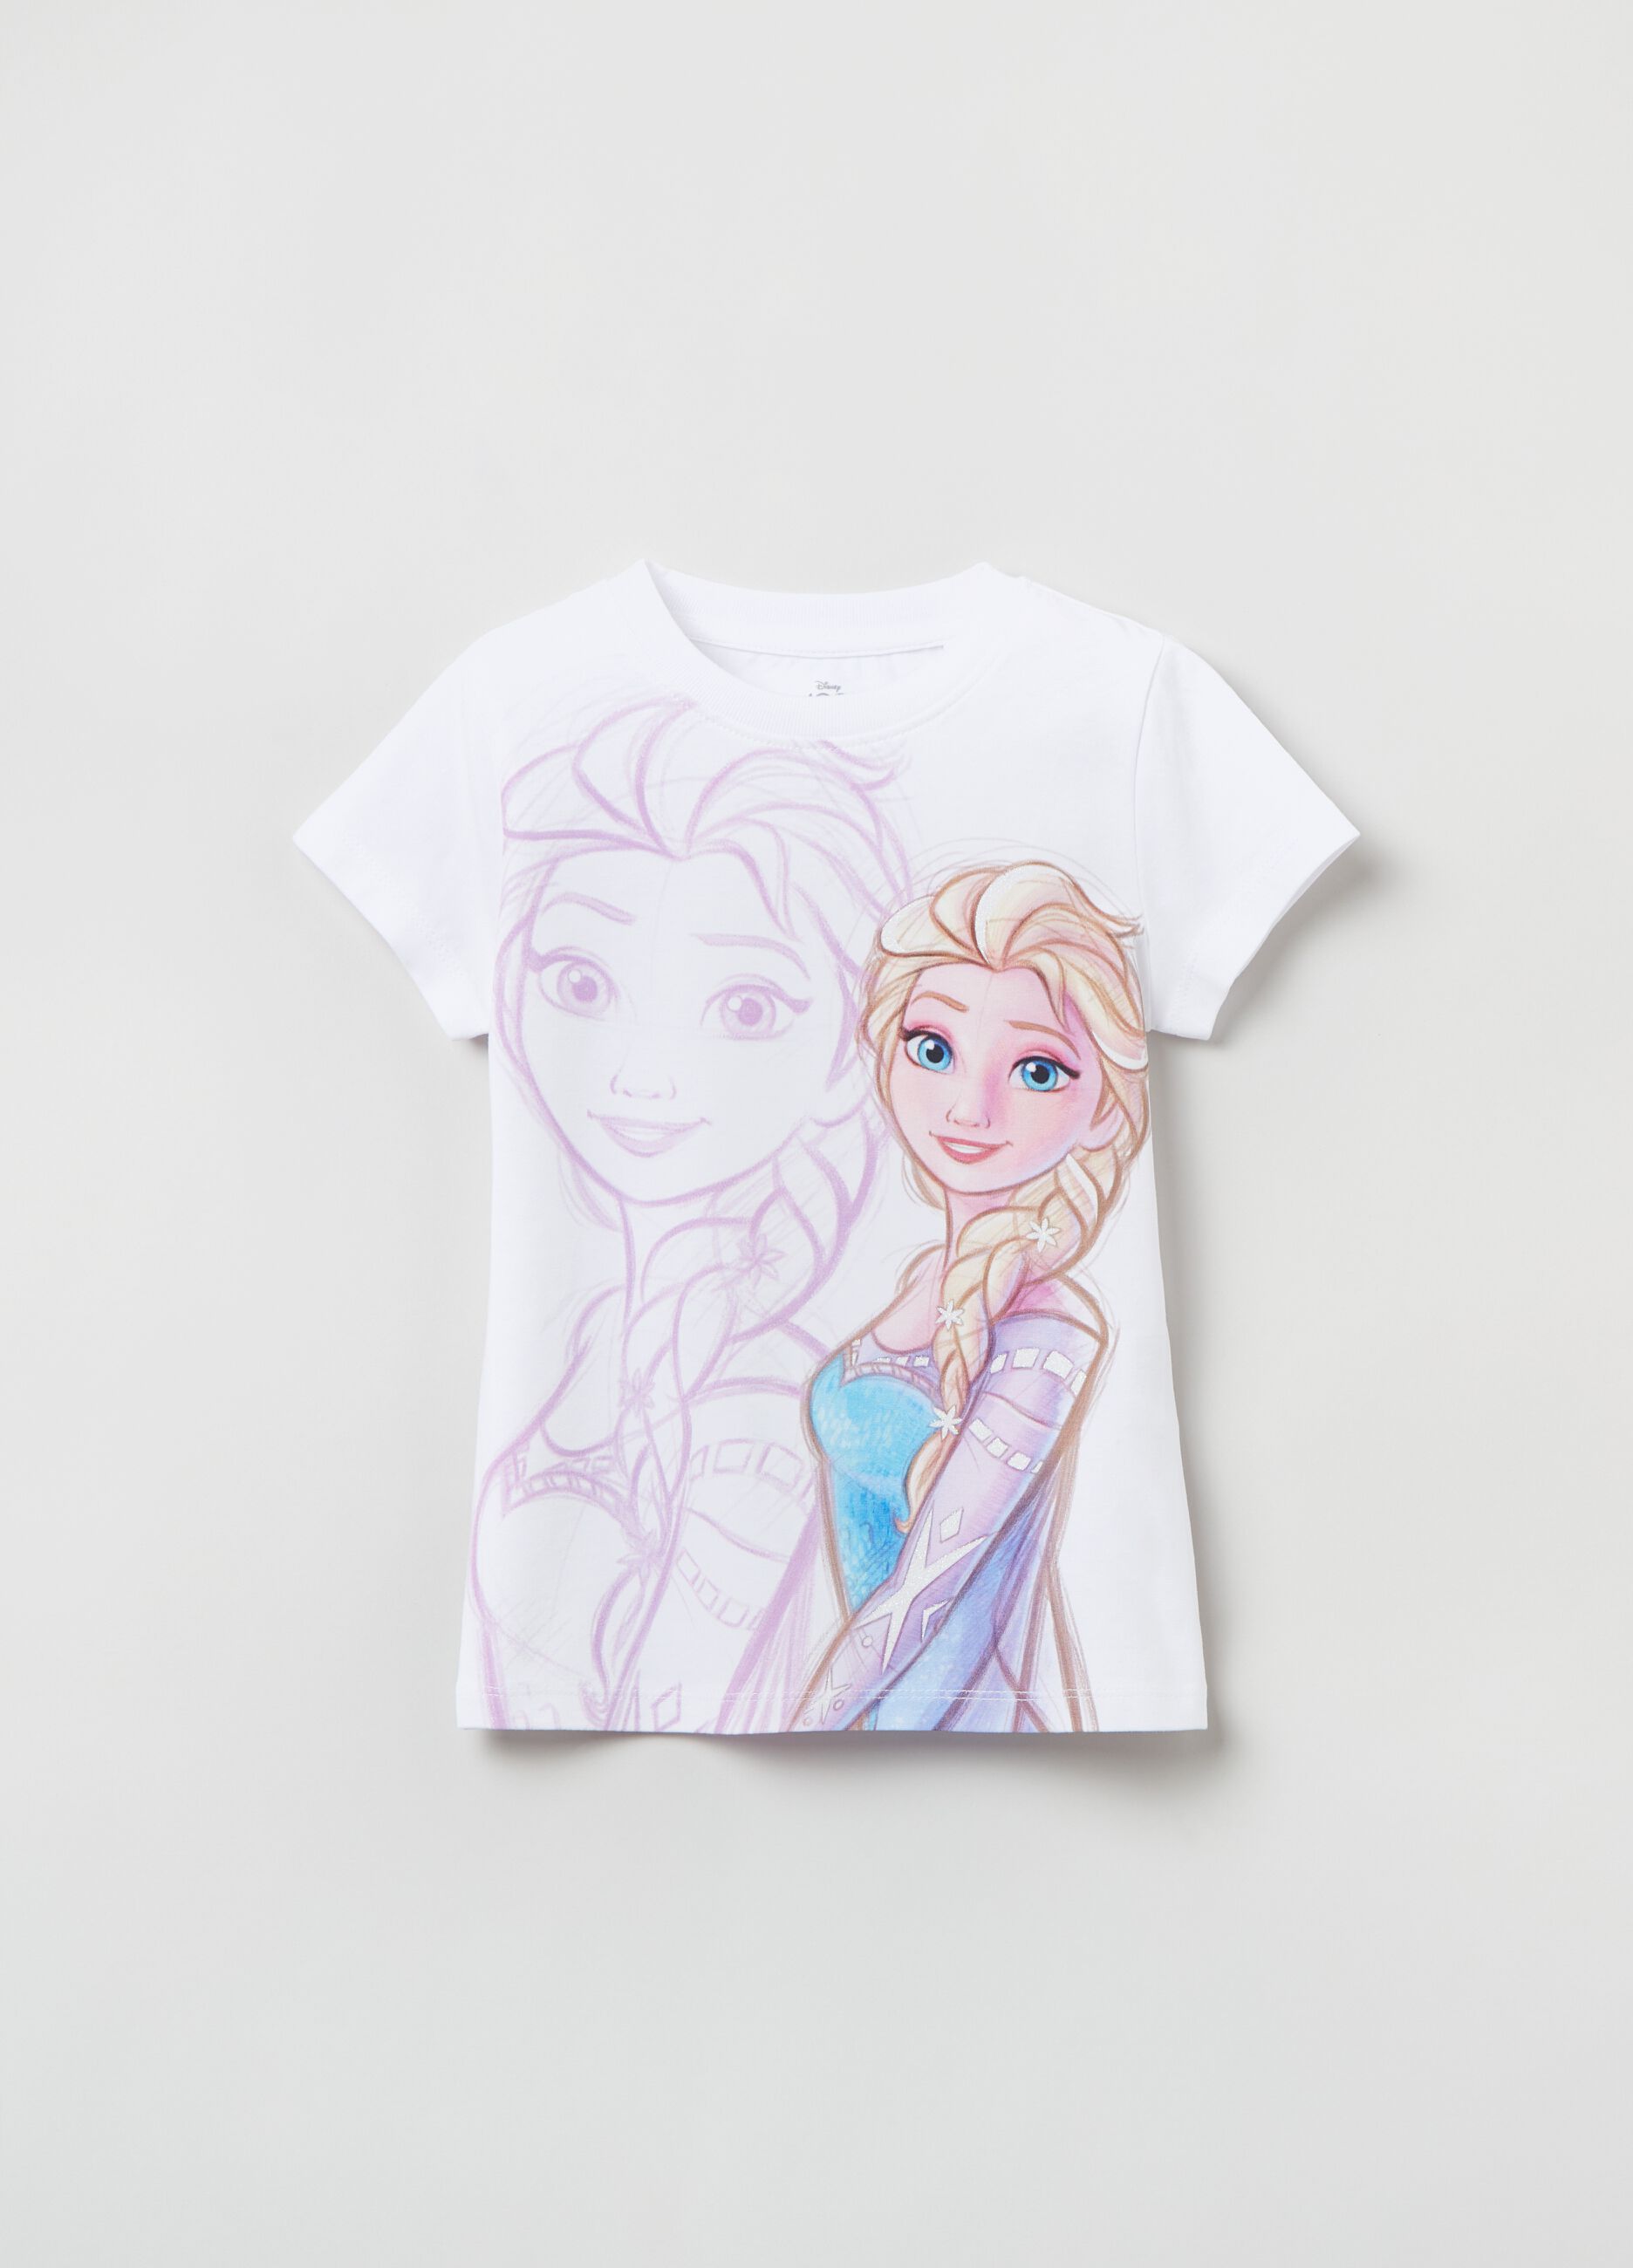 T-shirt with Disney 100th Anniversary print